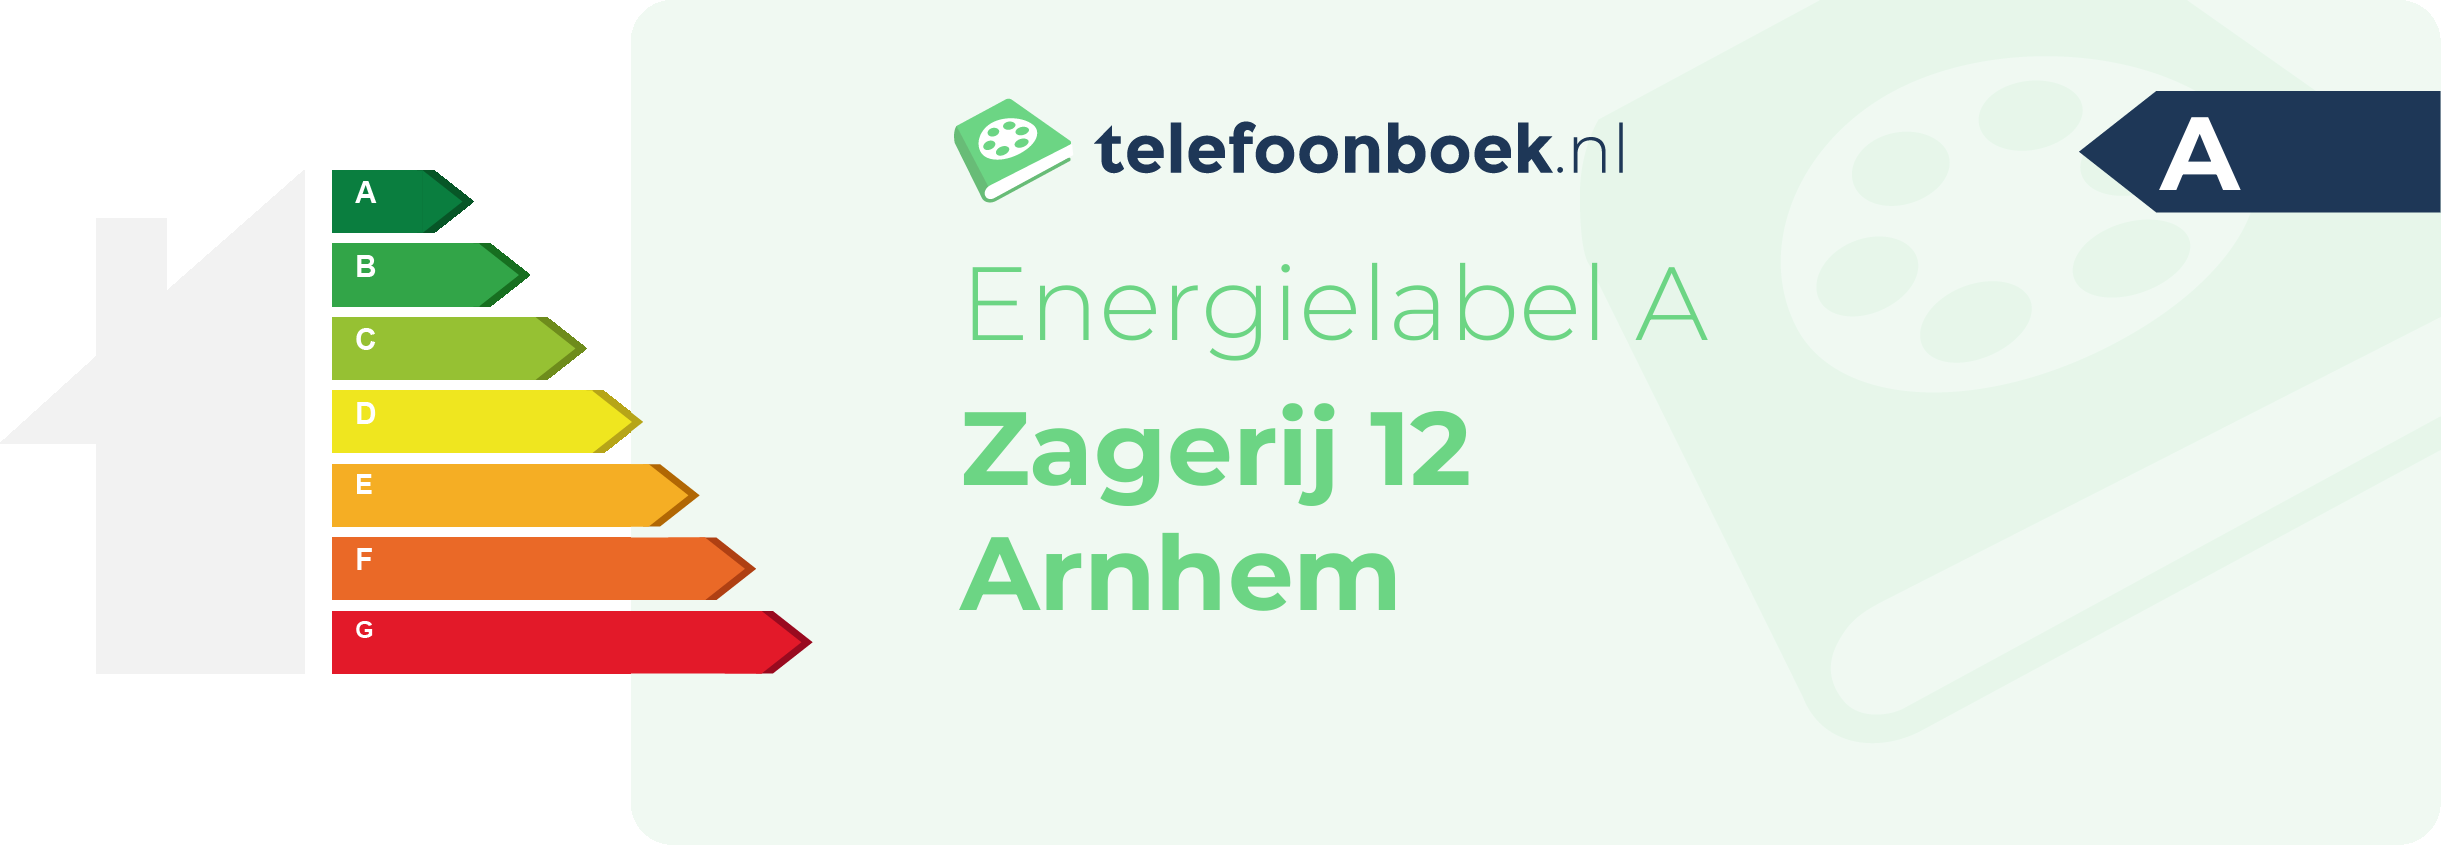 Energielabel Zagerij 12 Arnhem